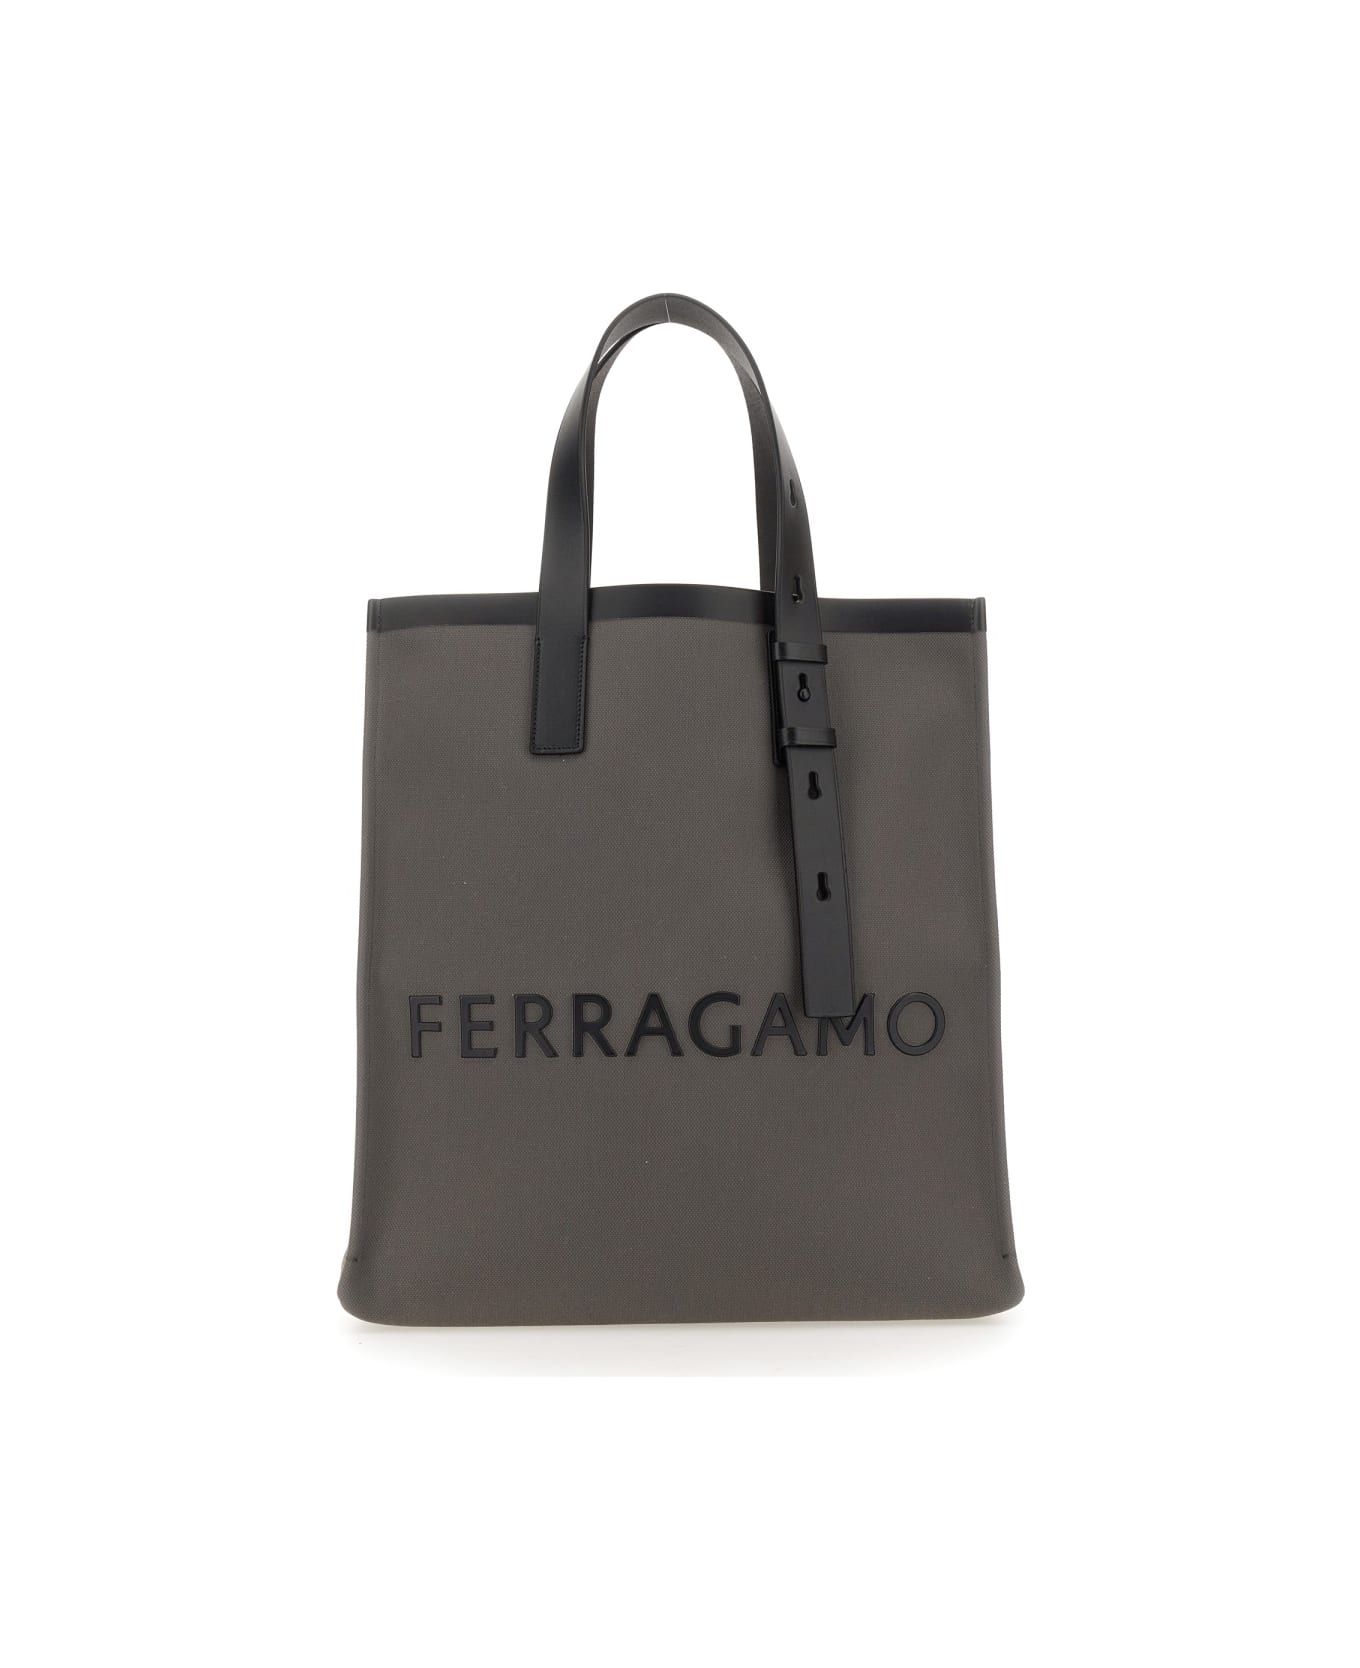 Ferragamo Tote Bag With Logo - GREY トートバッグ